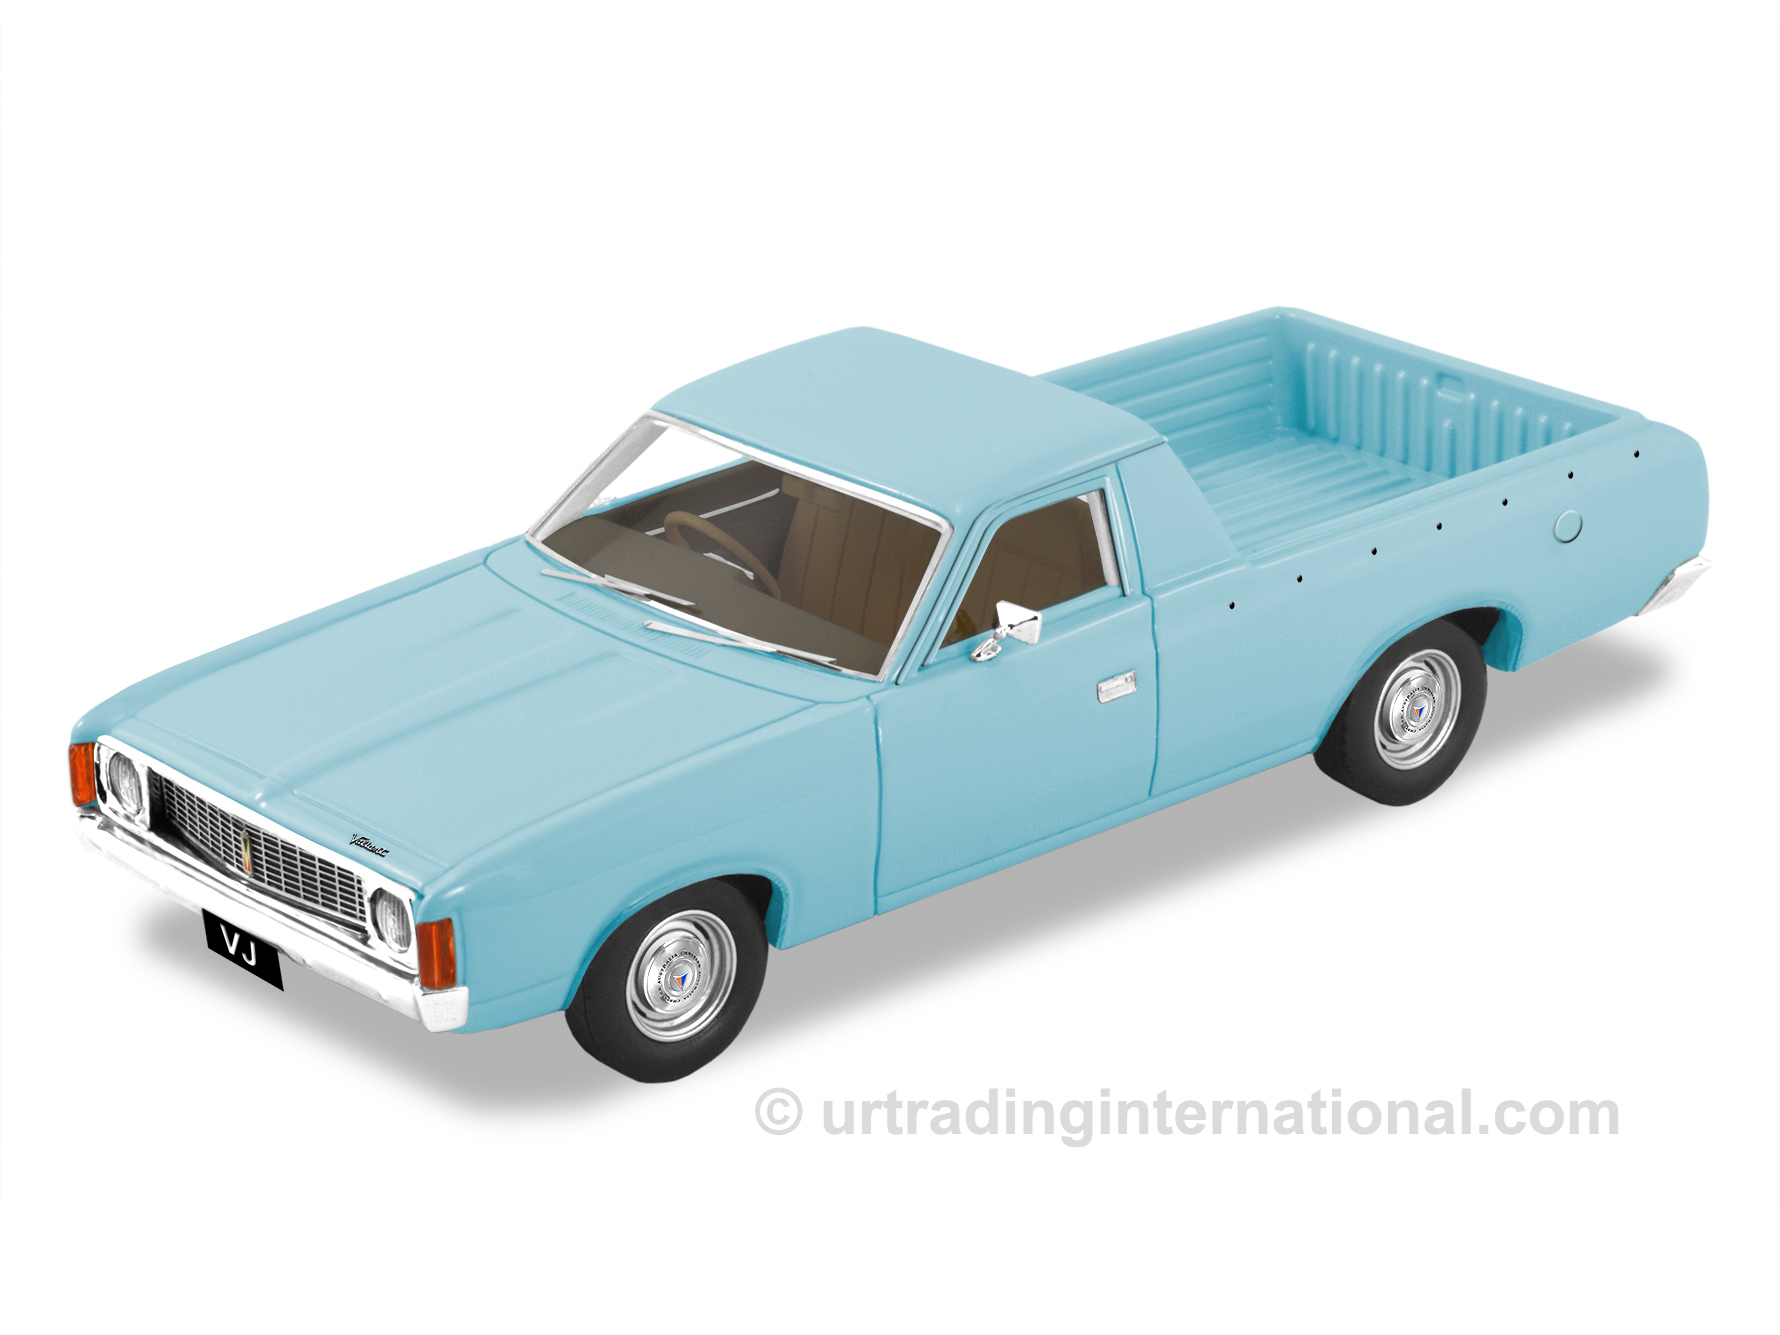 1973 Valiant VJ Ute – Fountain Blue.